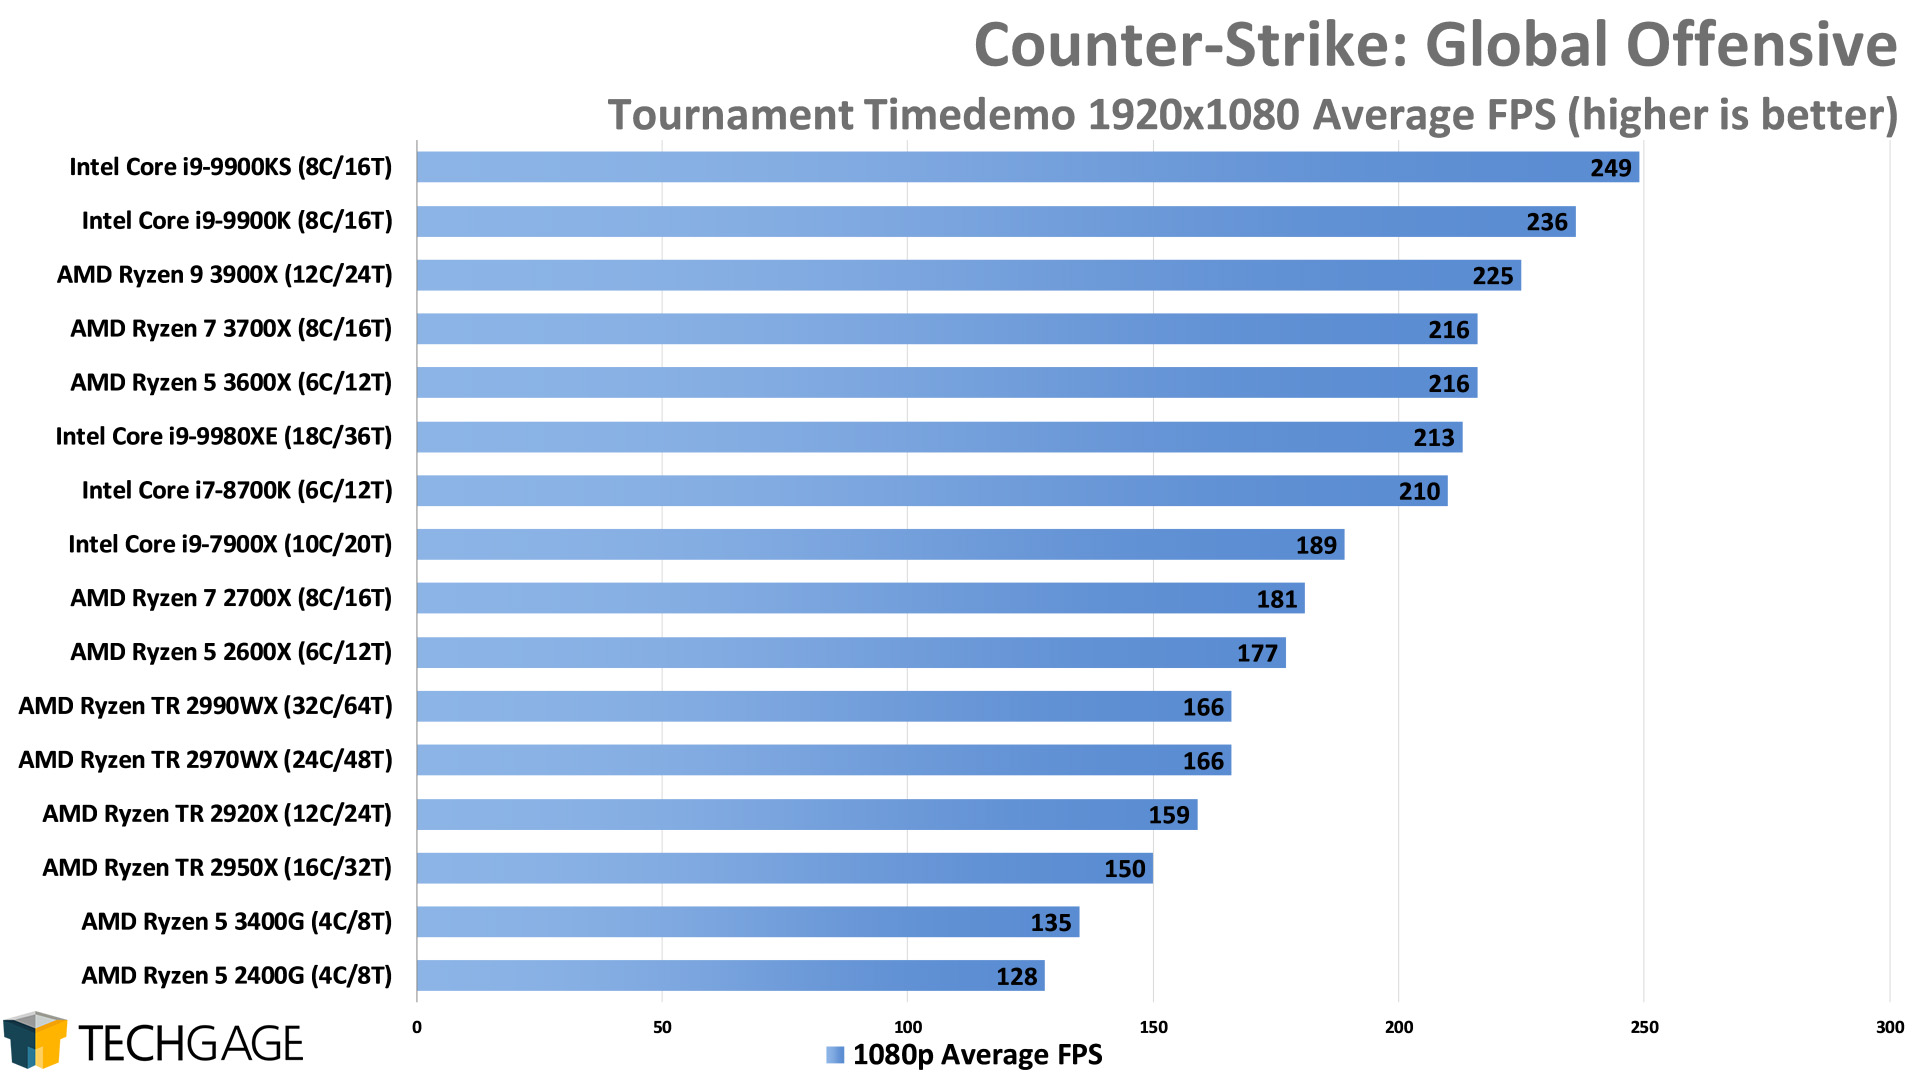 Counter-Strike Global Offensive - 1080p Average FPS (Intel Core i9-9900KS)